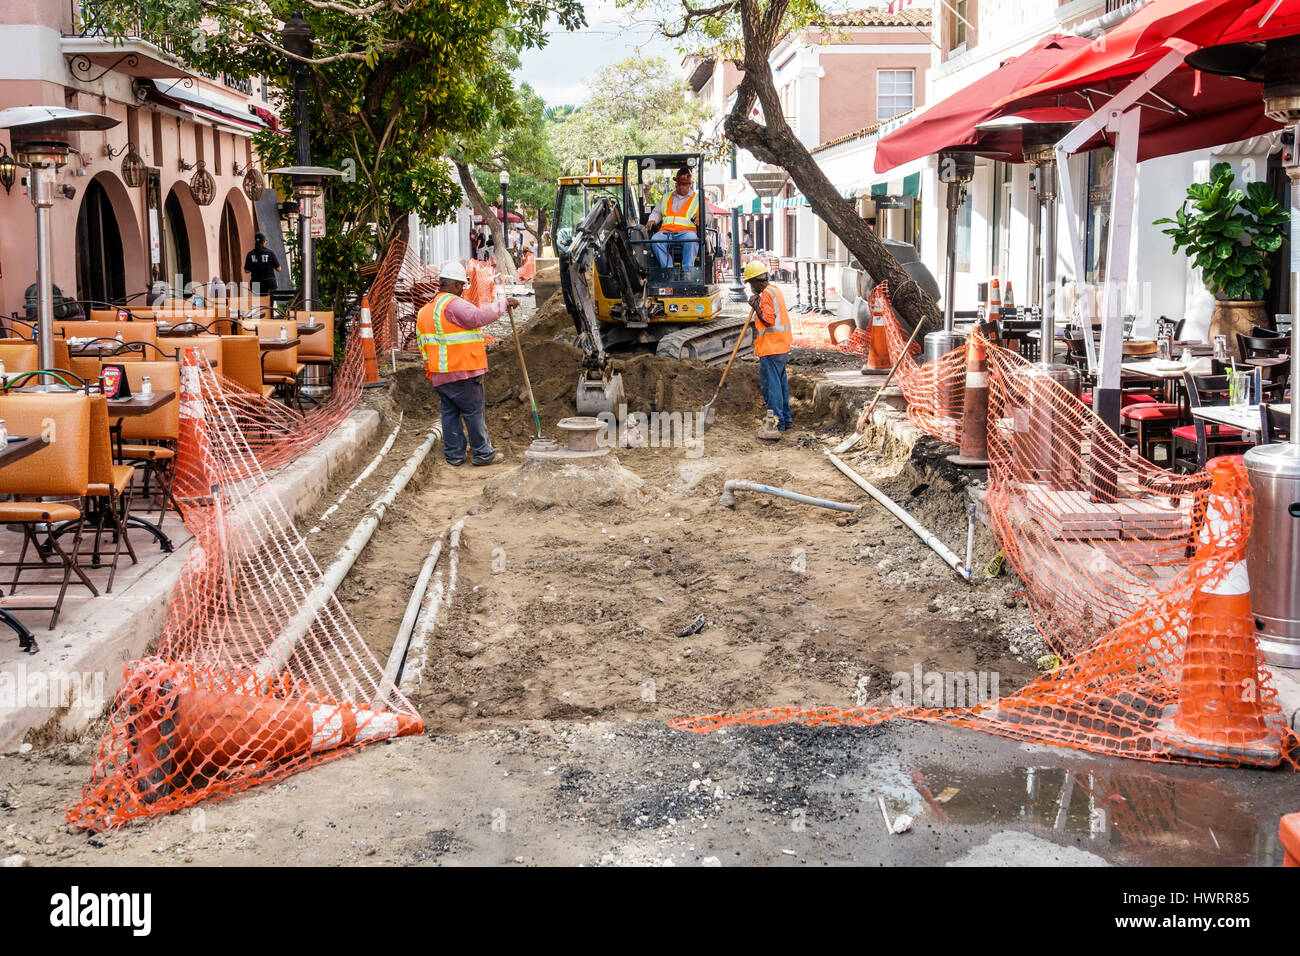 Miami Beach Florida,Espanola Way,historic Preservation District,public works,street construction,pavement,excavation,dirt,safety barrier,Black man men Stock Photo